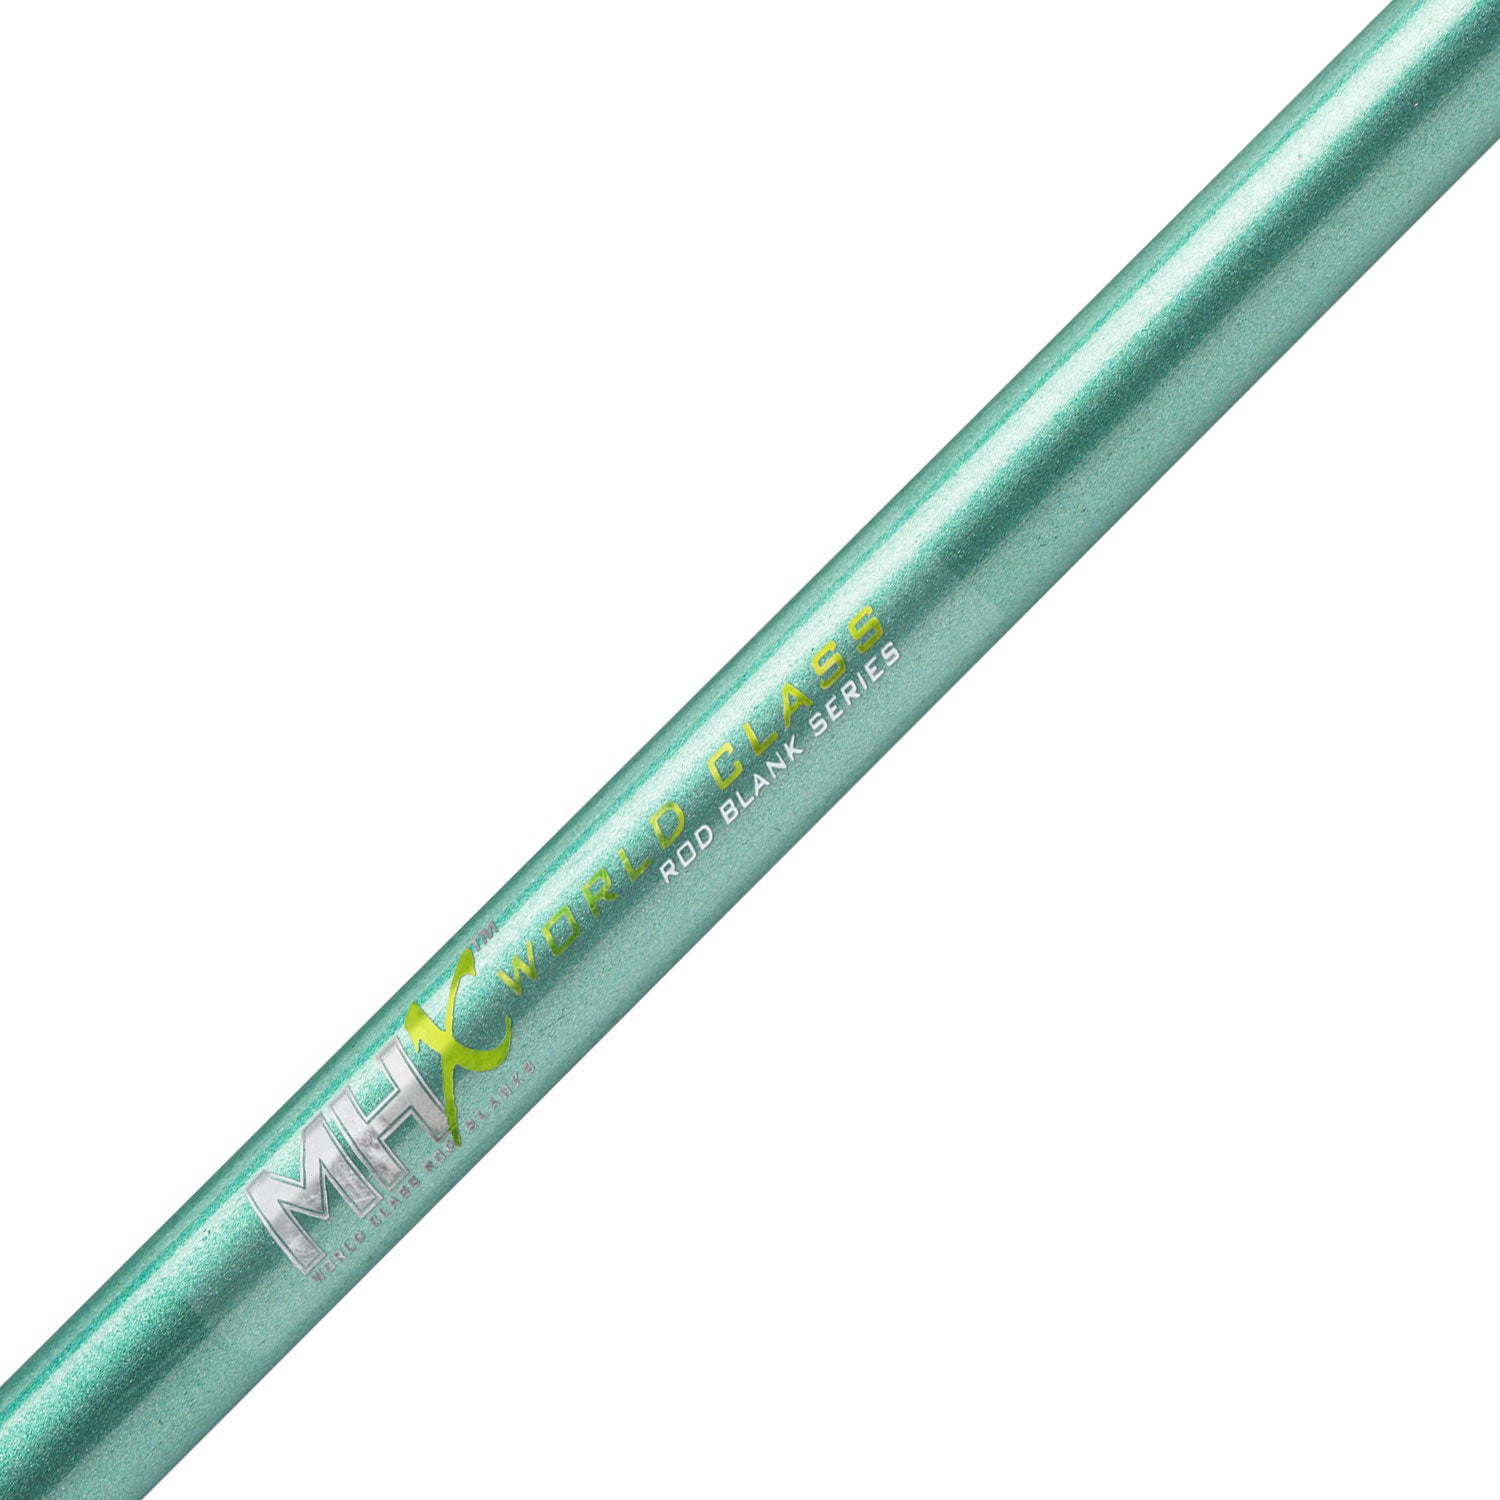 MHX 7'0" Medium Light Saltwater Rod Blank - L843